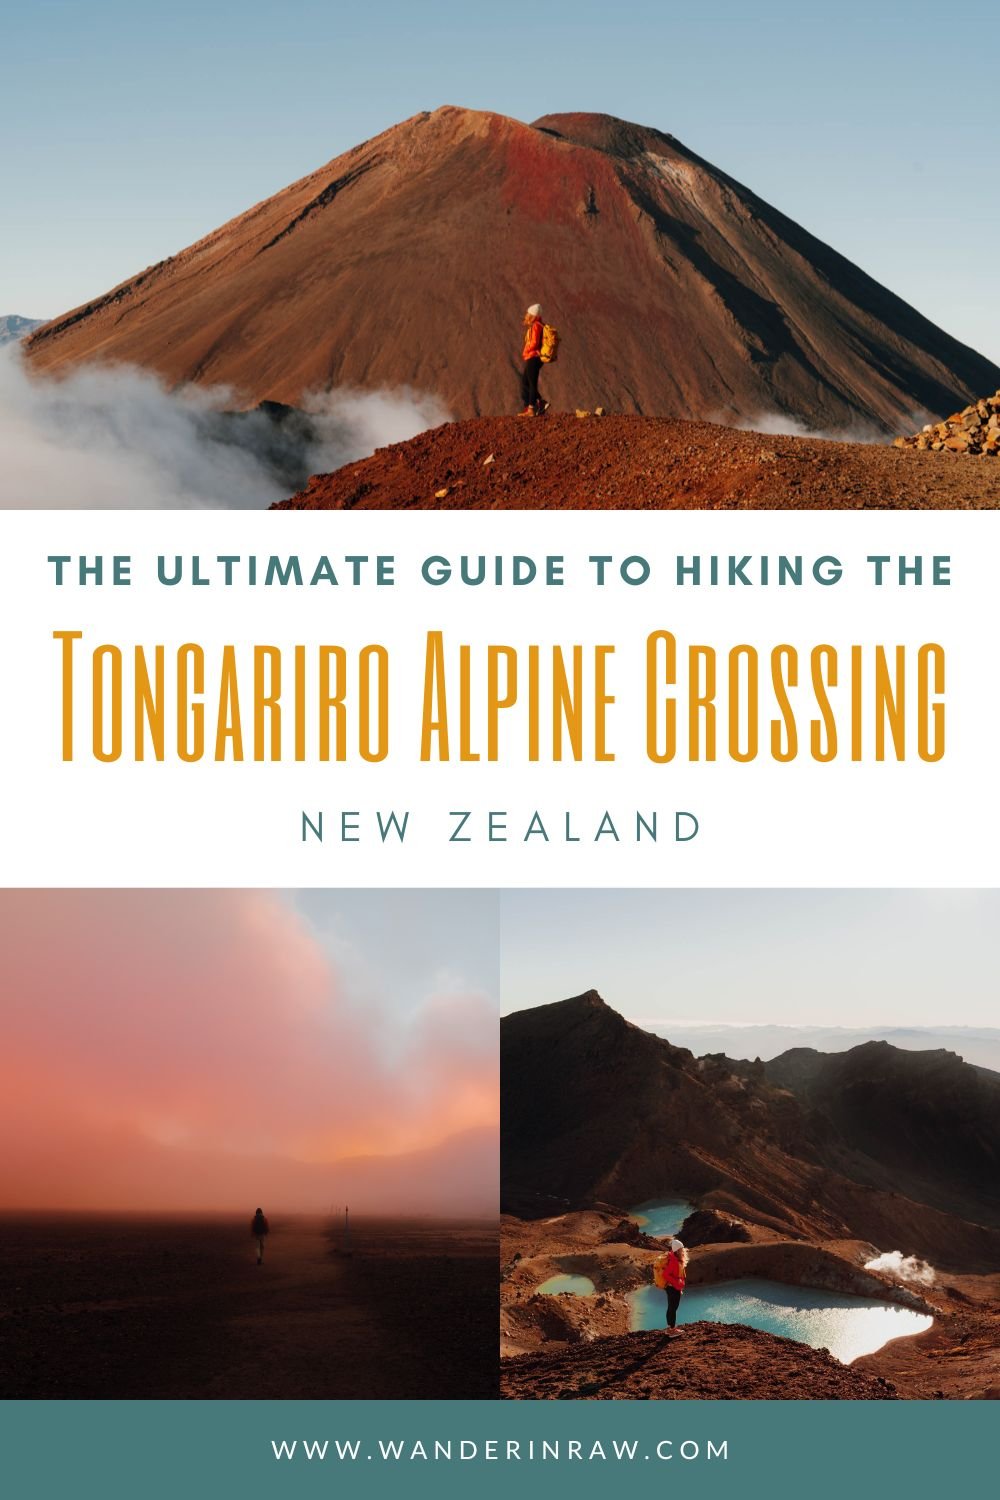 The Ultimate Guide to Hiking Tongariro Crossing